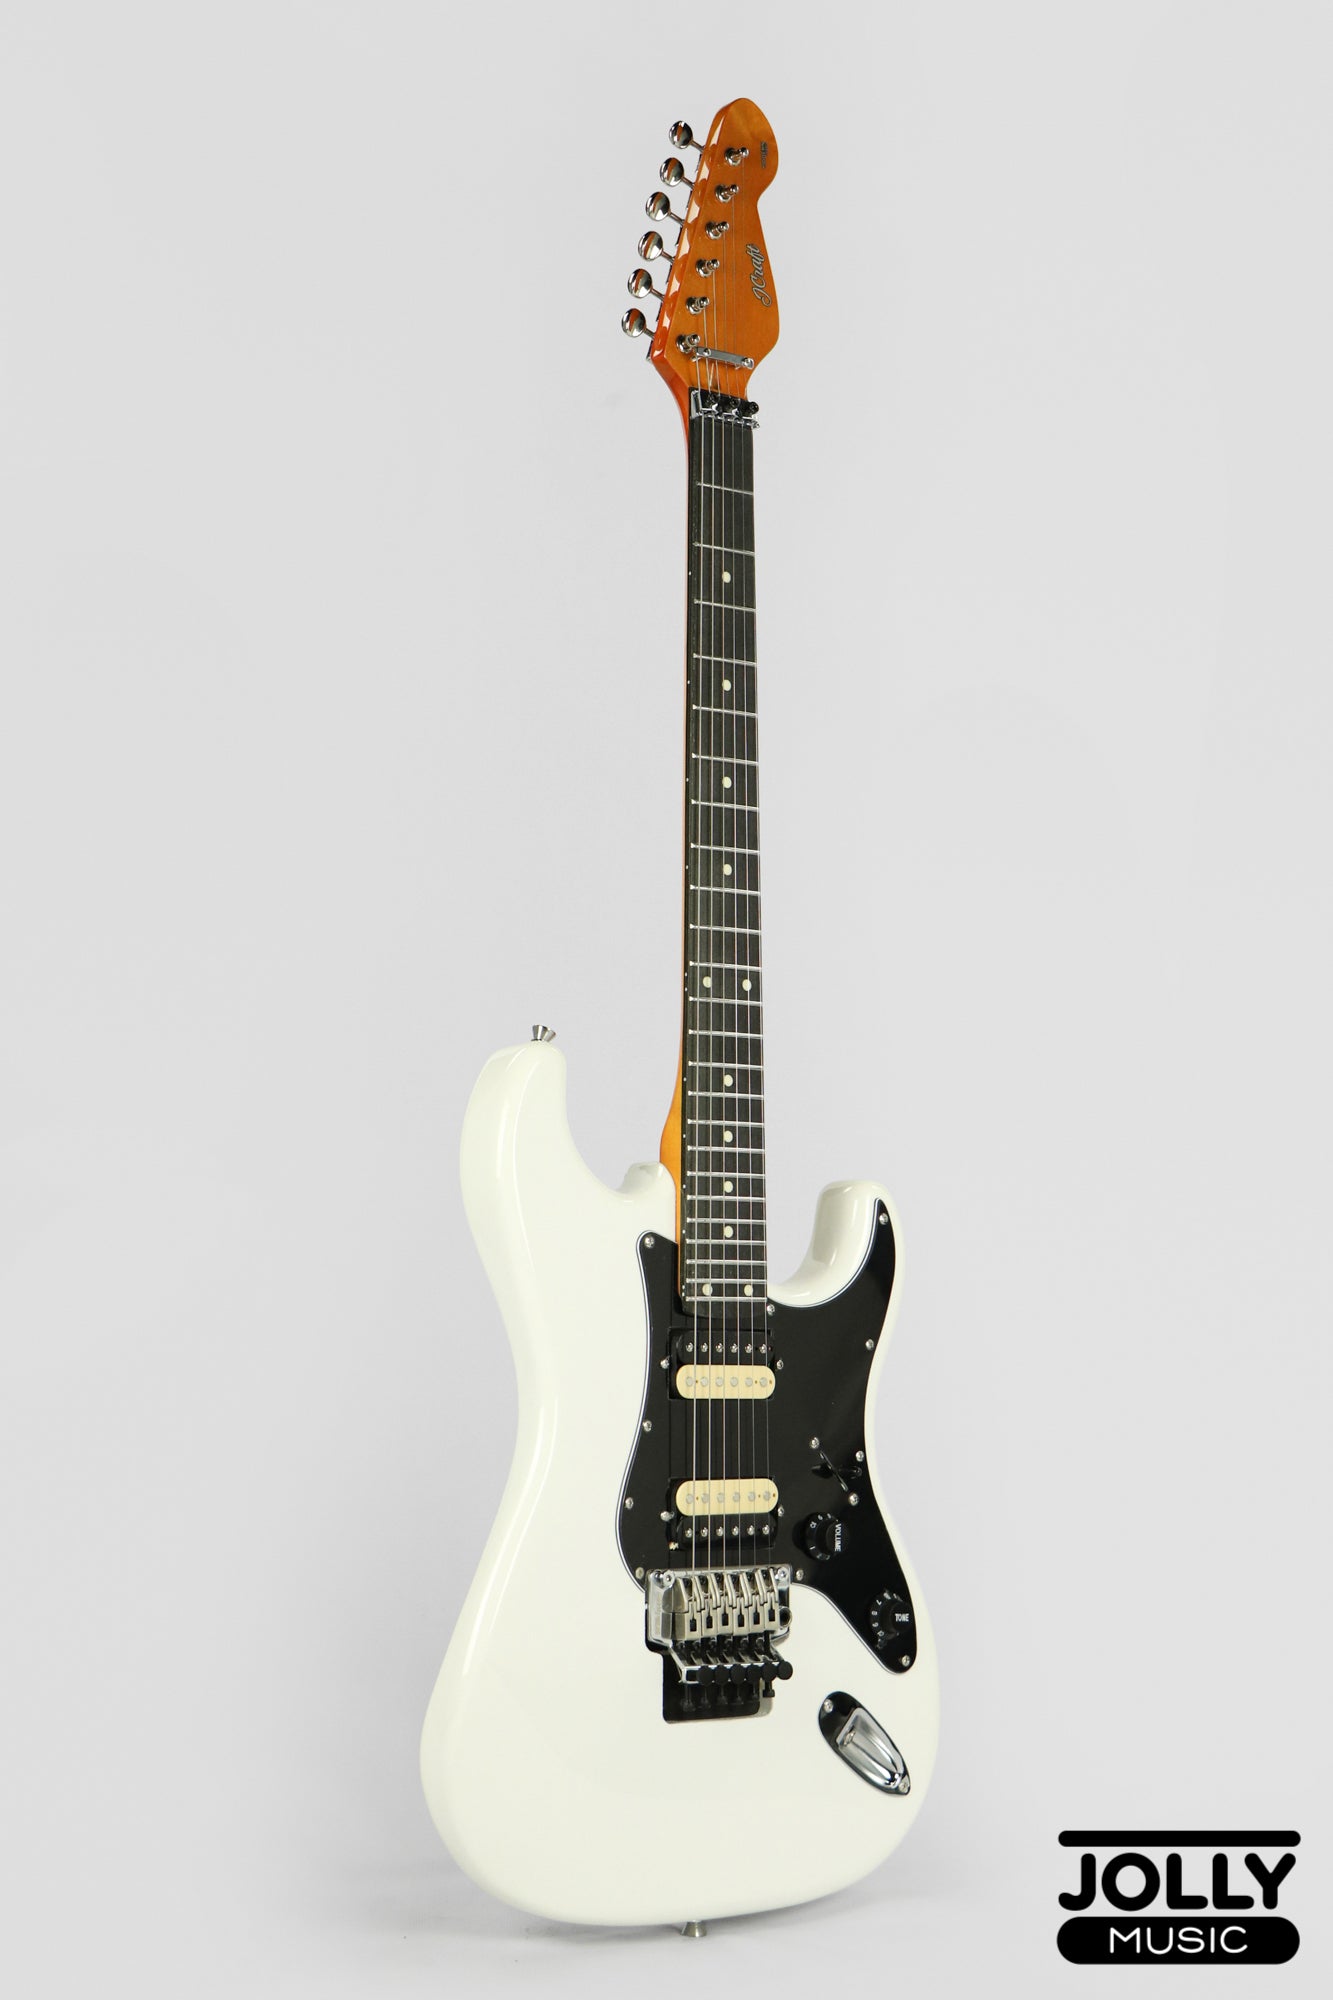 JCraft S-3H FR24 2023 HH Zebra Superstrat Electric Guitar w/ Wilkinson Floyd Rose - White